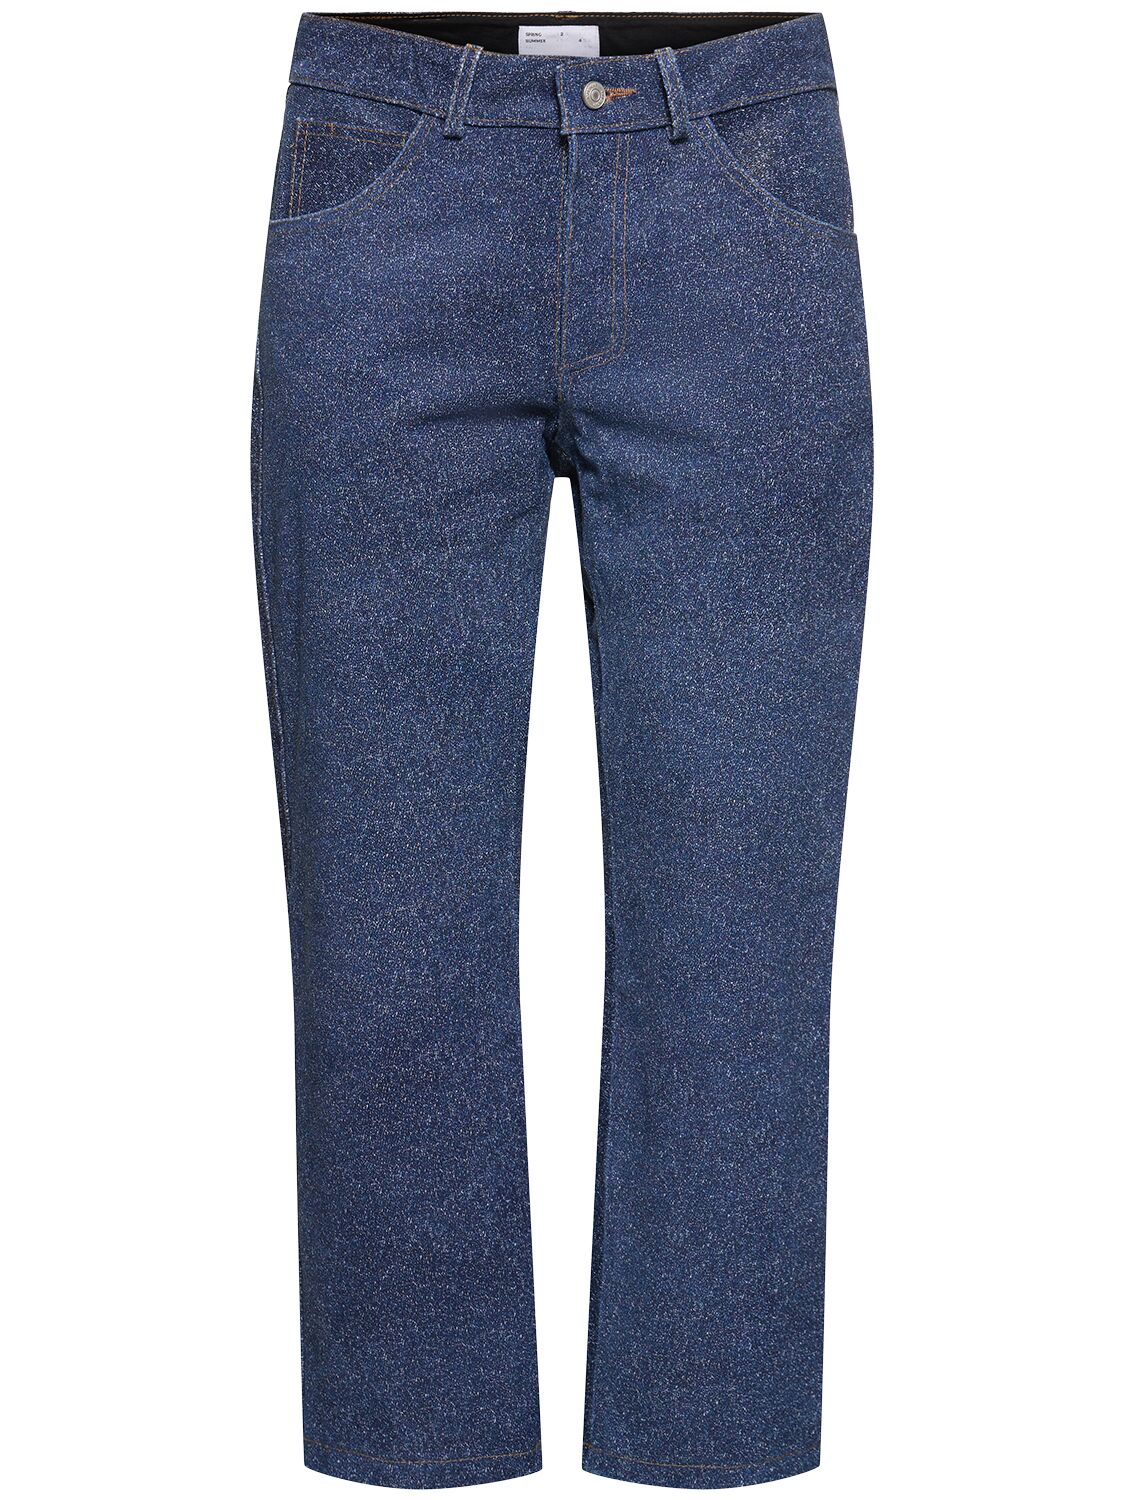 4sdesigns Denim Effect Printed Leather Pants In Blue